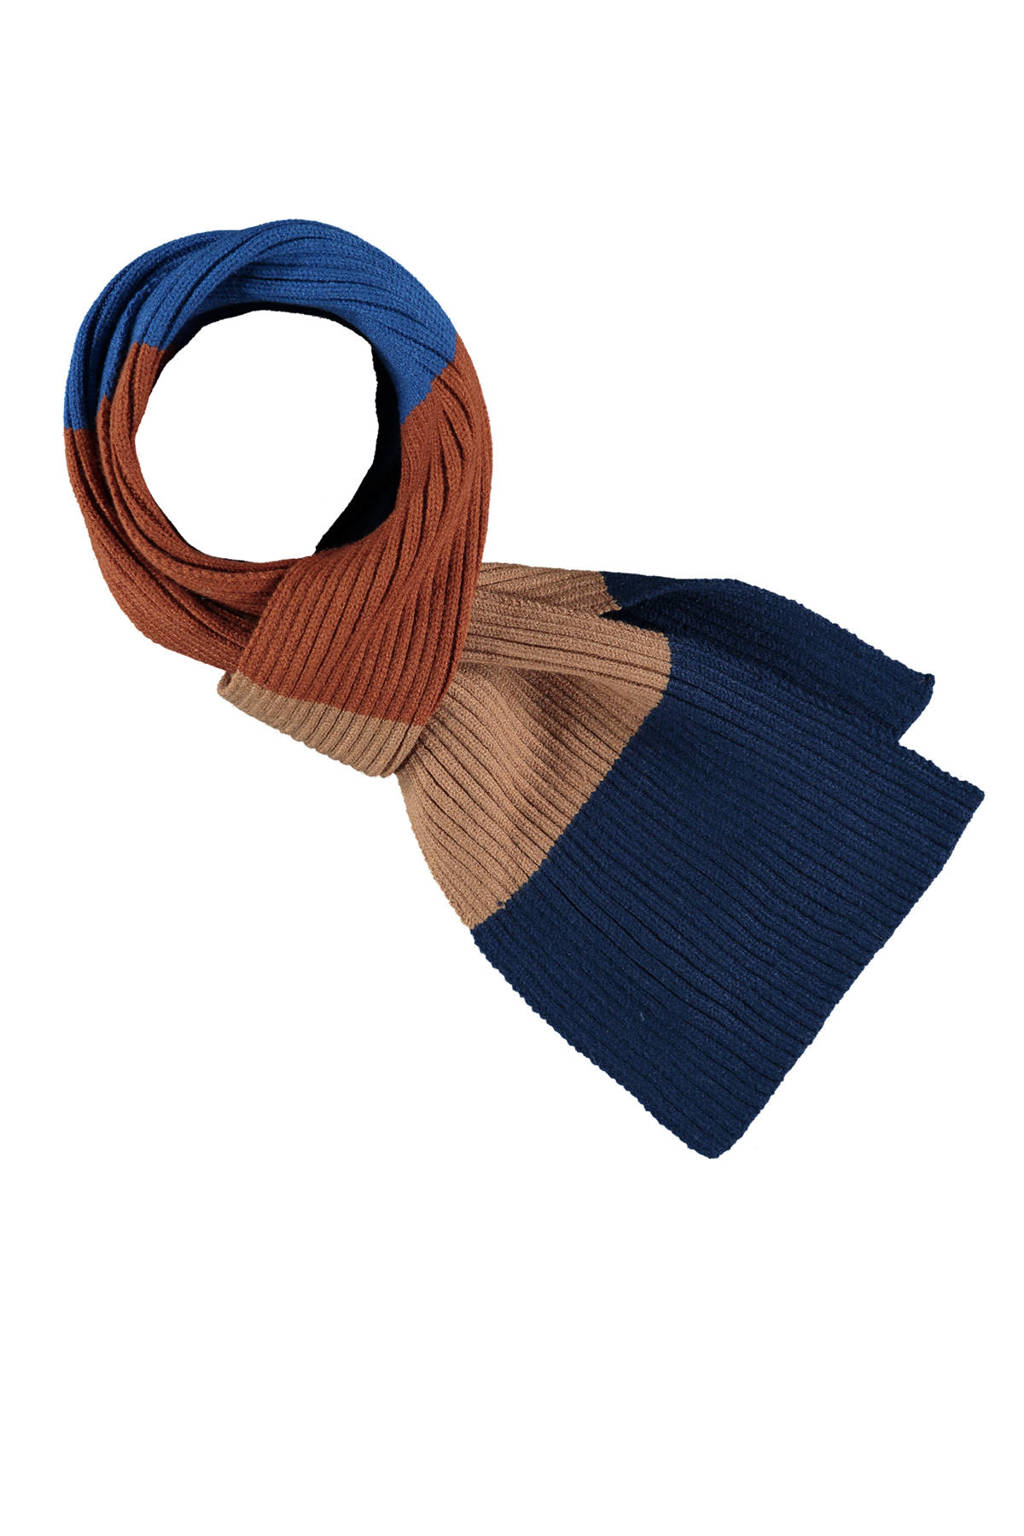 Sarlini sjaal met streeppatroon multi, Blauw/camel